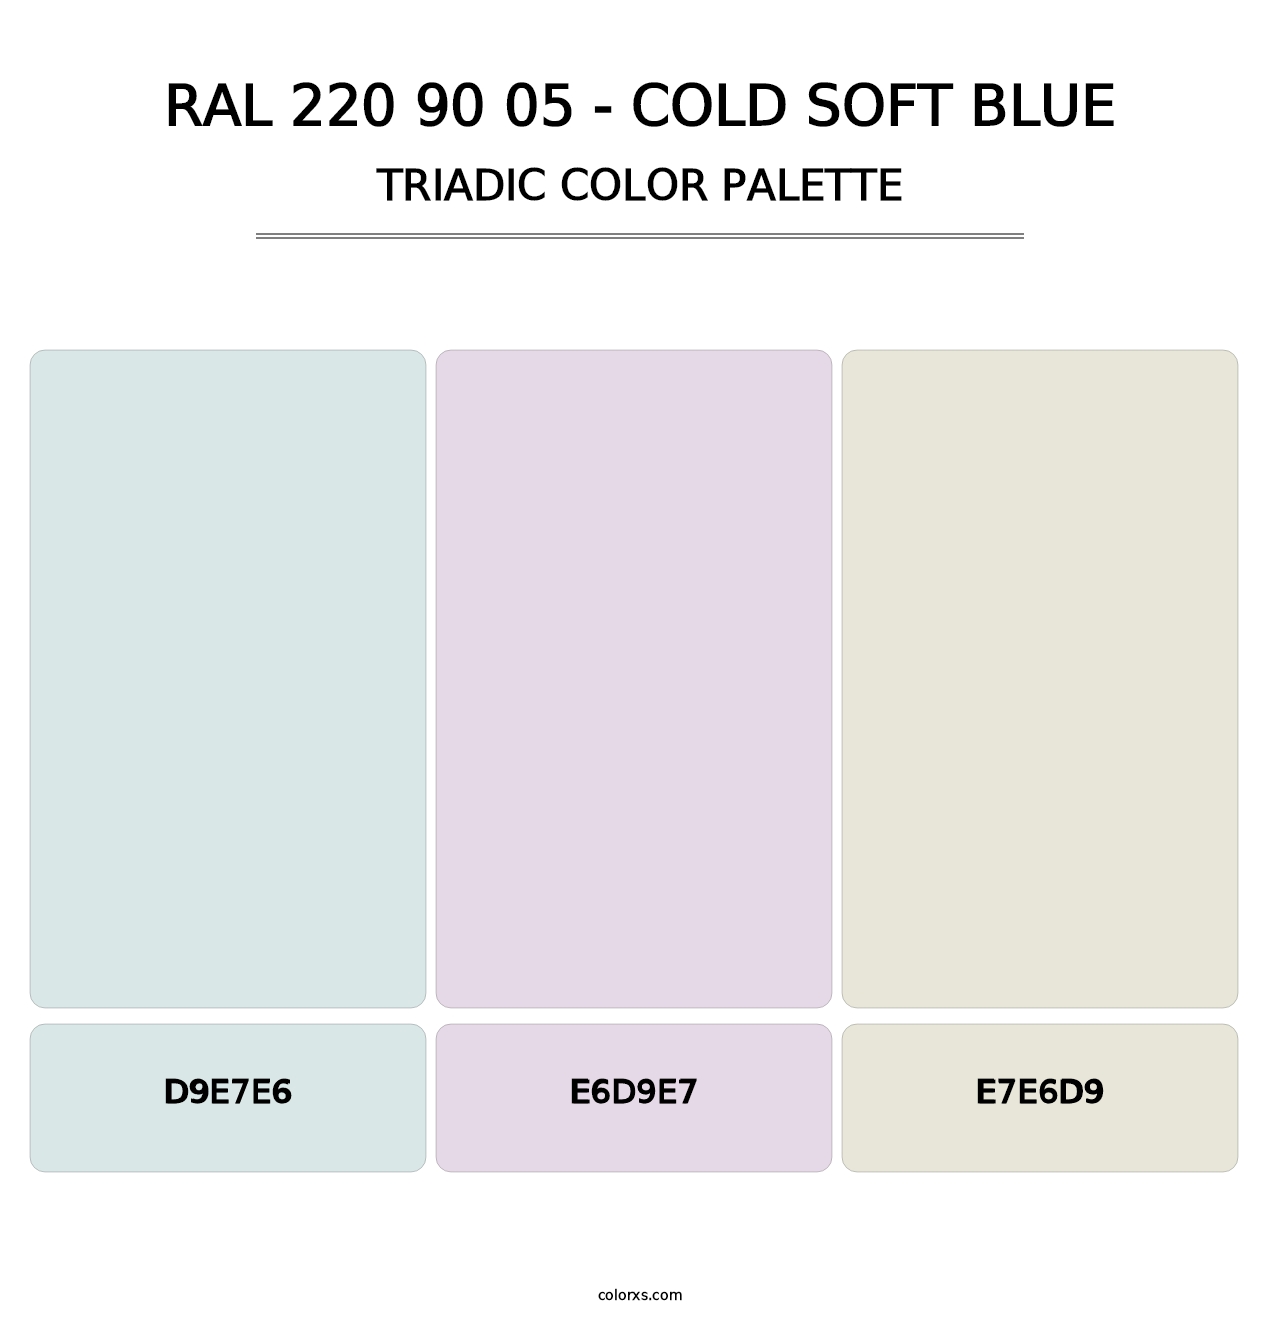 RAL 220 90 05 - Cold Soft Blue - Triadic Color Palette